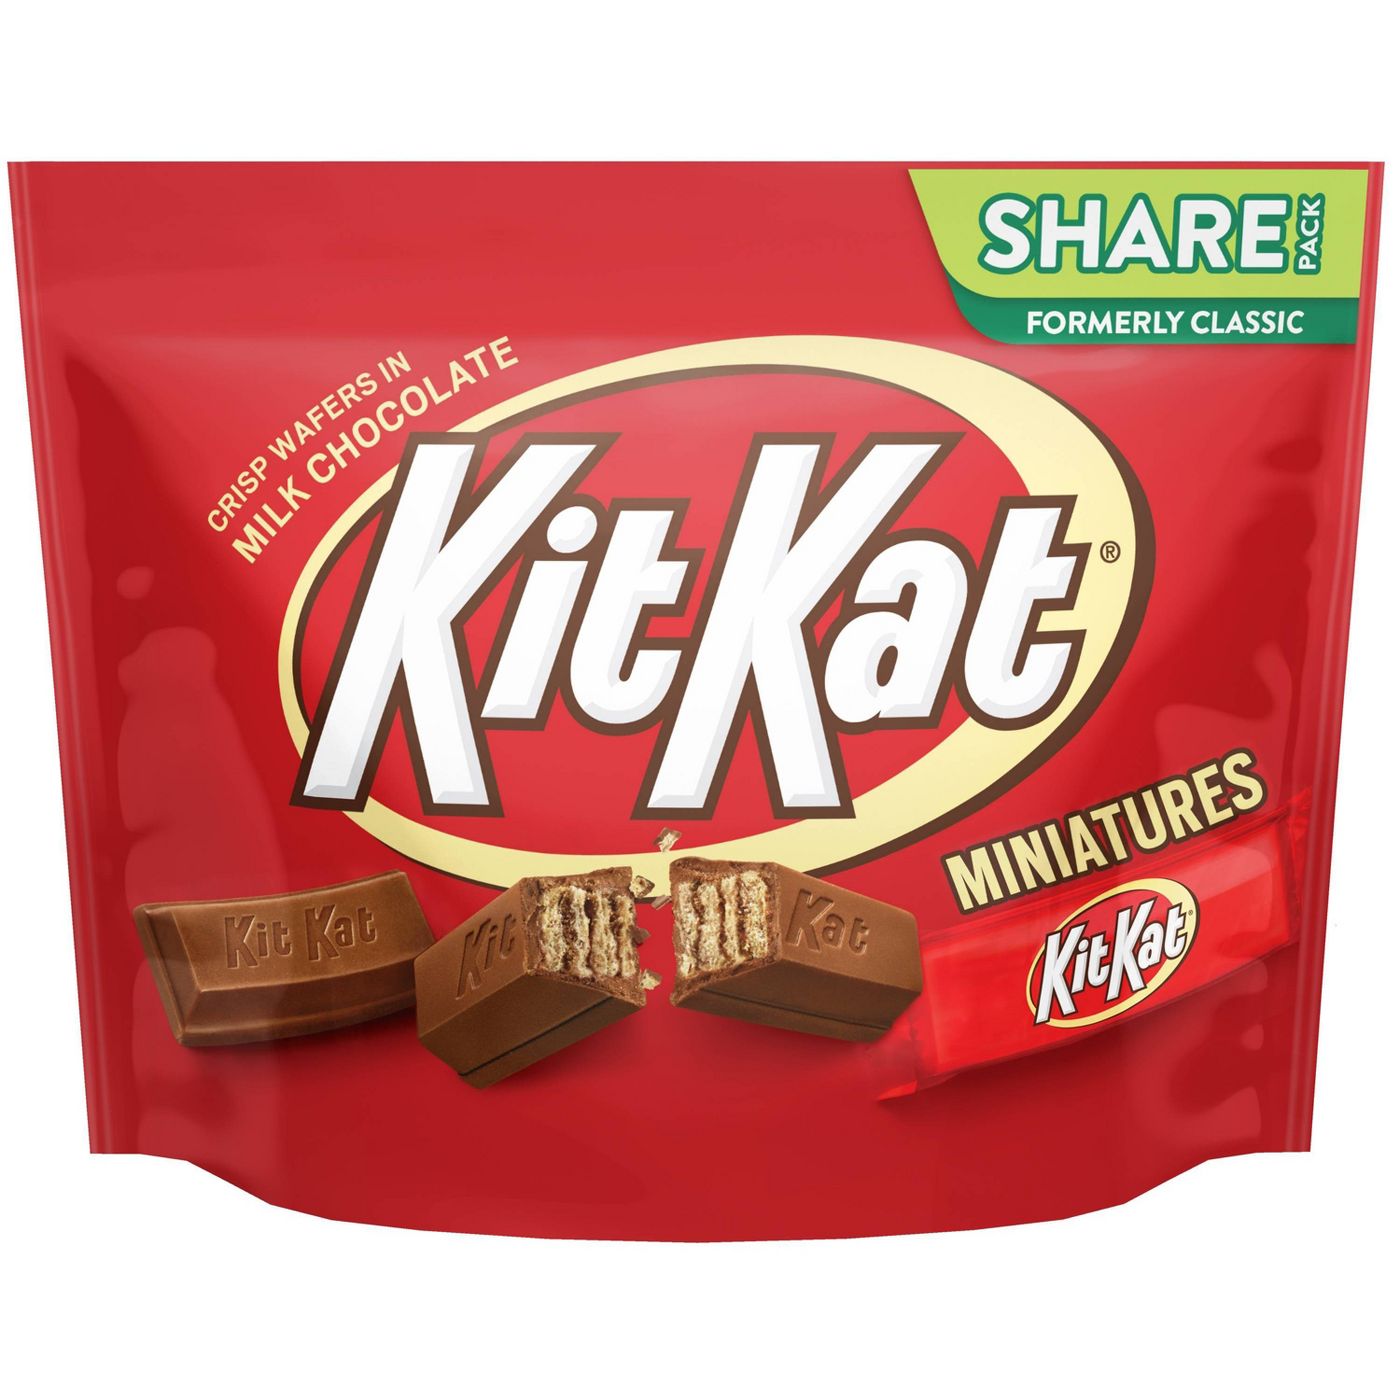 Kit Kat Miniatures Milk Chocolate, Share Pack, 10.1oz